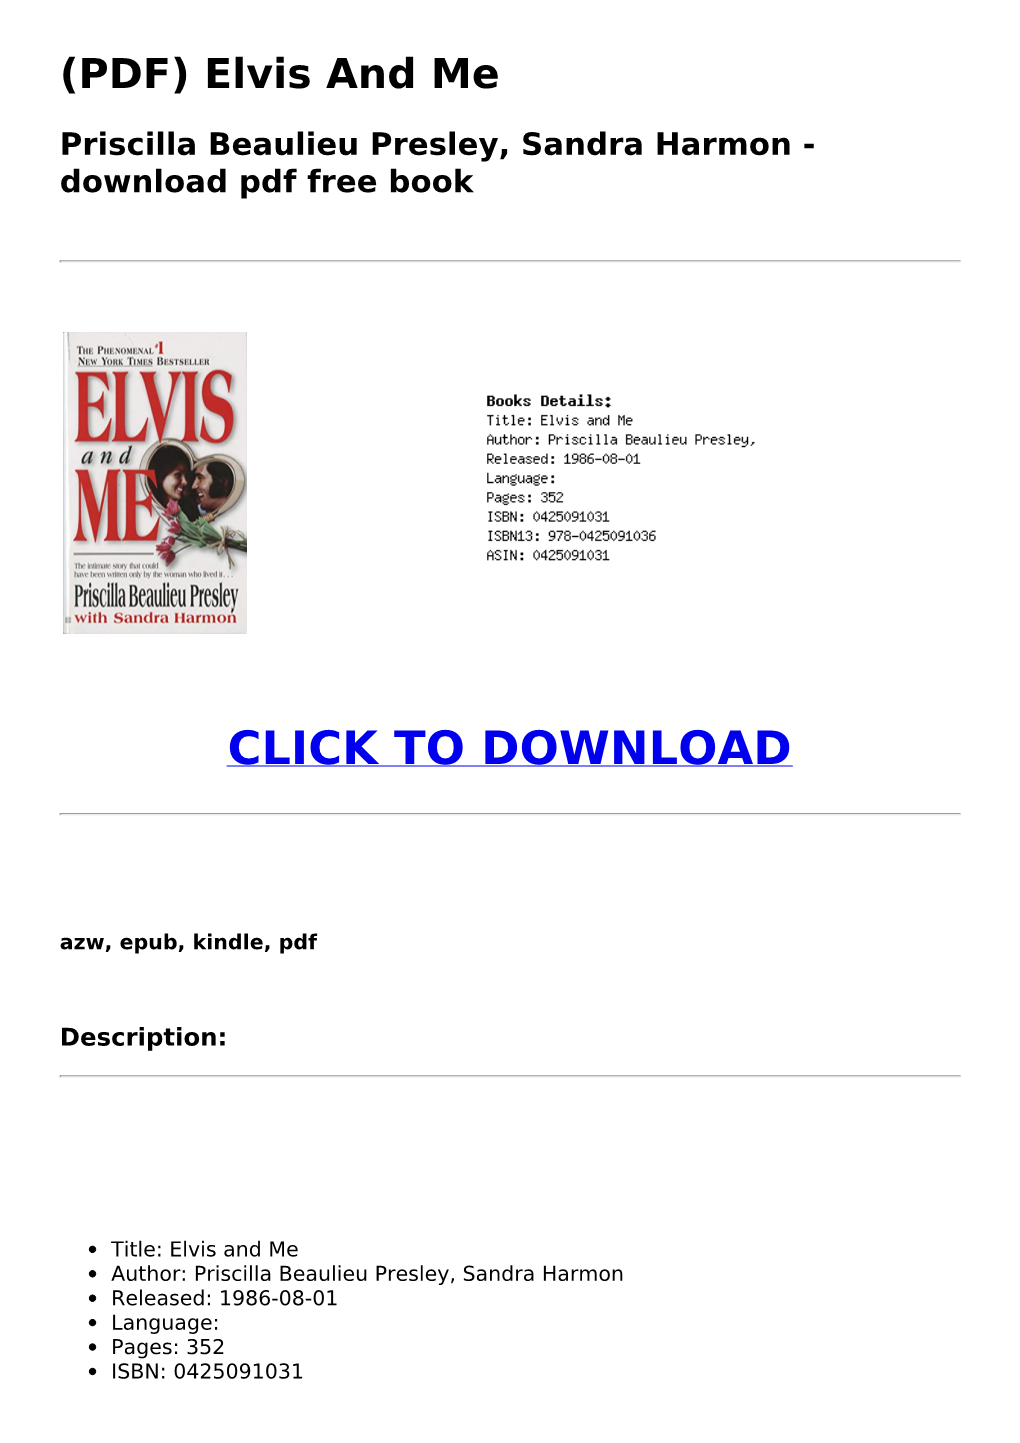 (PDF) Elvis and Me Priscilla Beaulieu Presley, Sandra Harmon